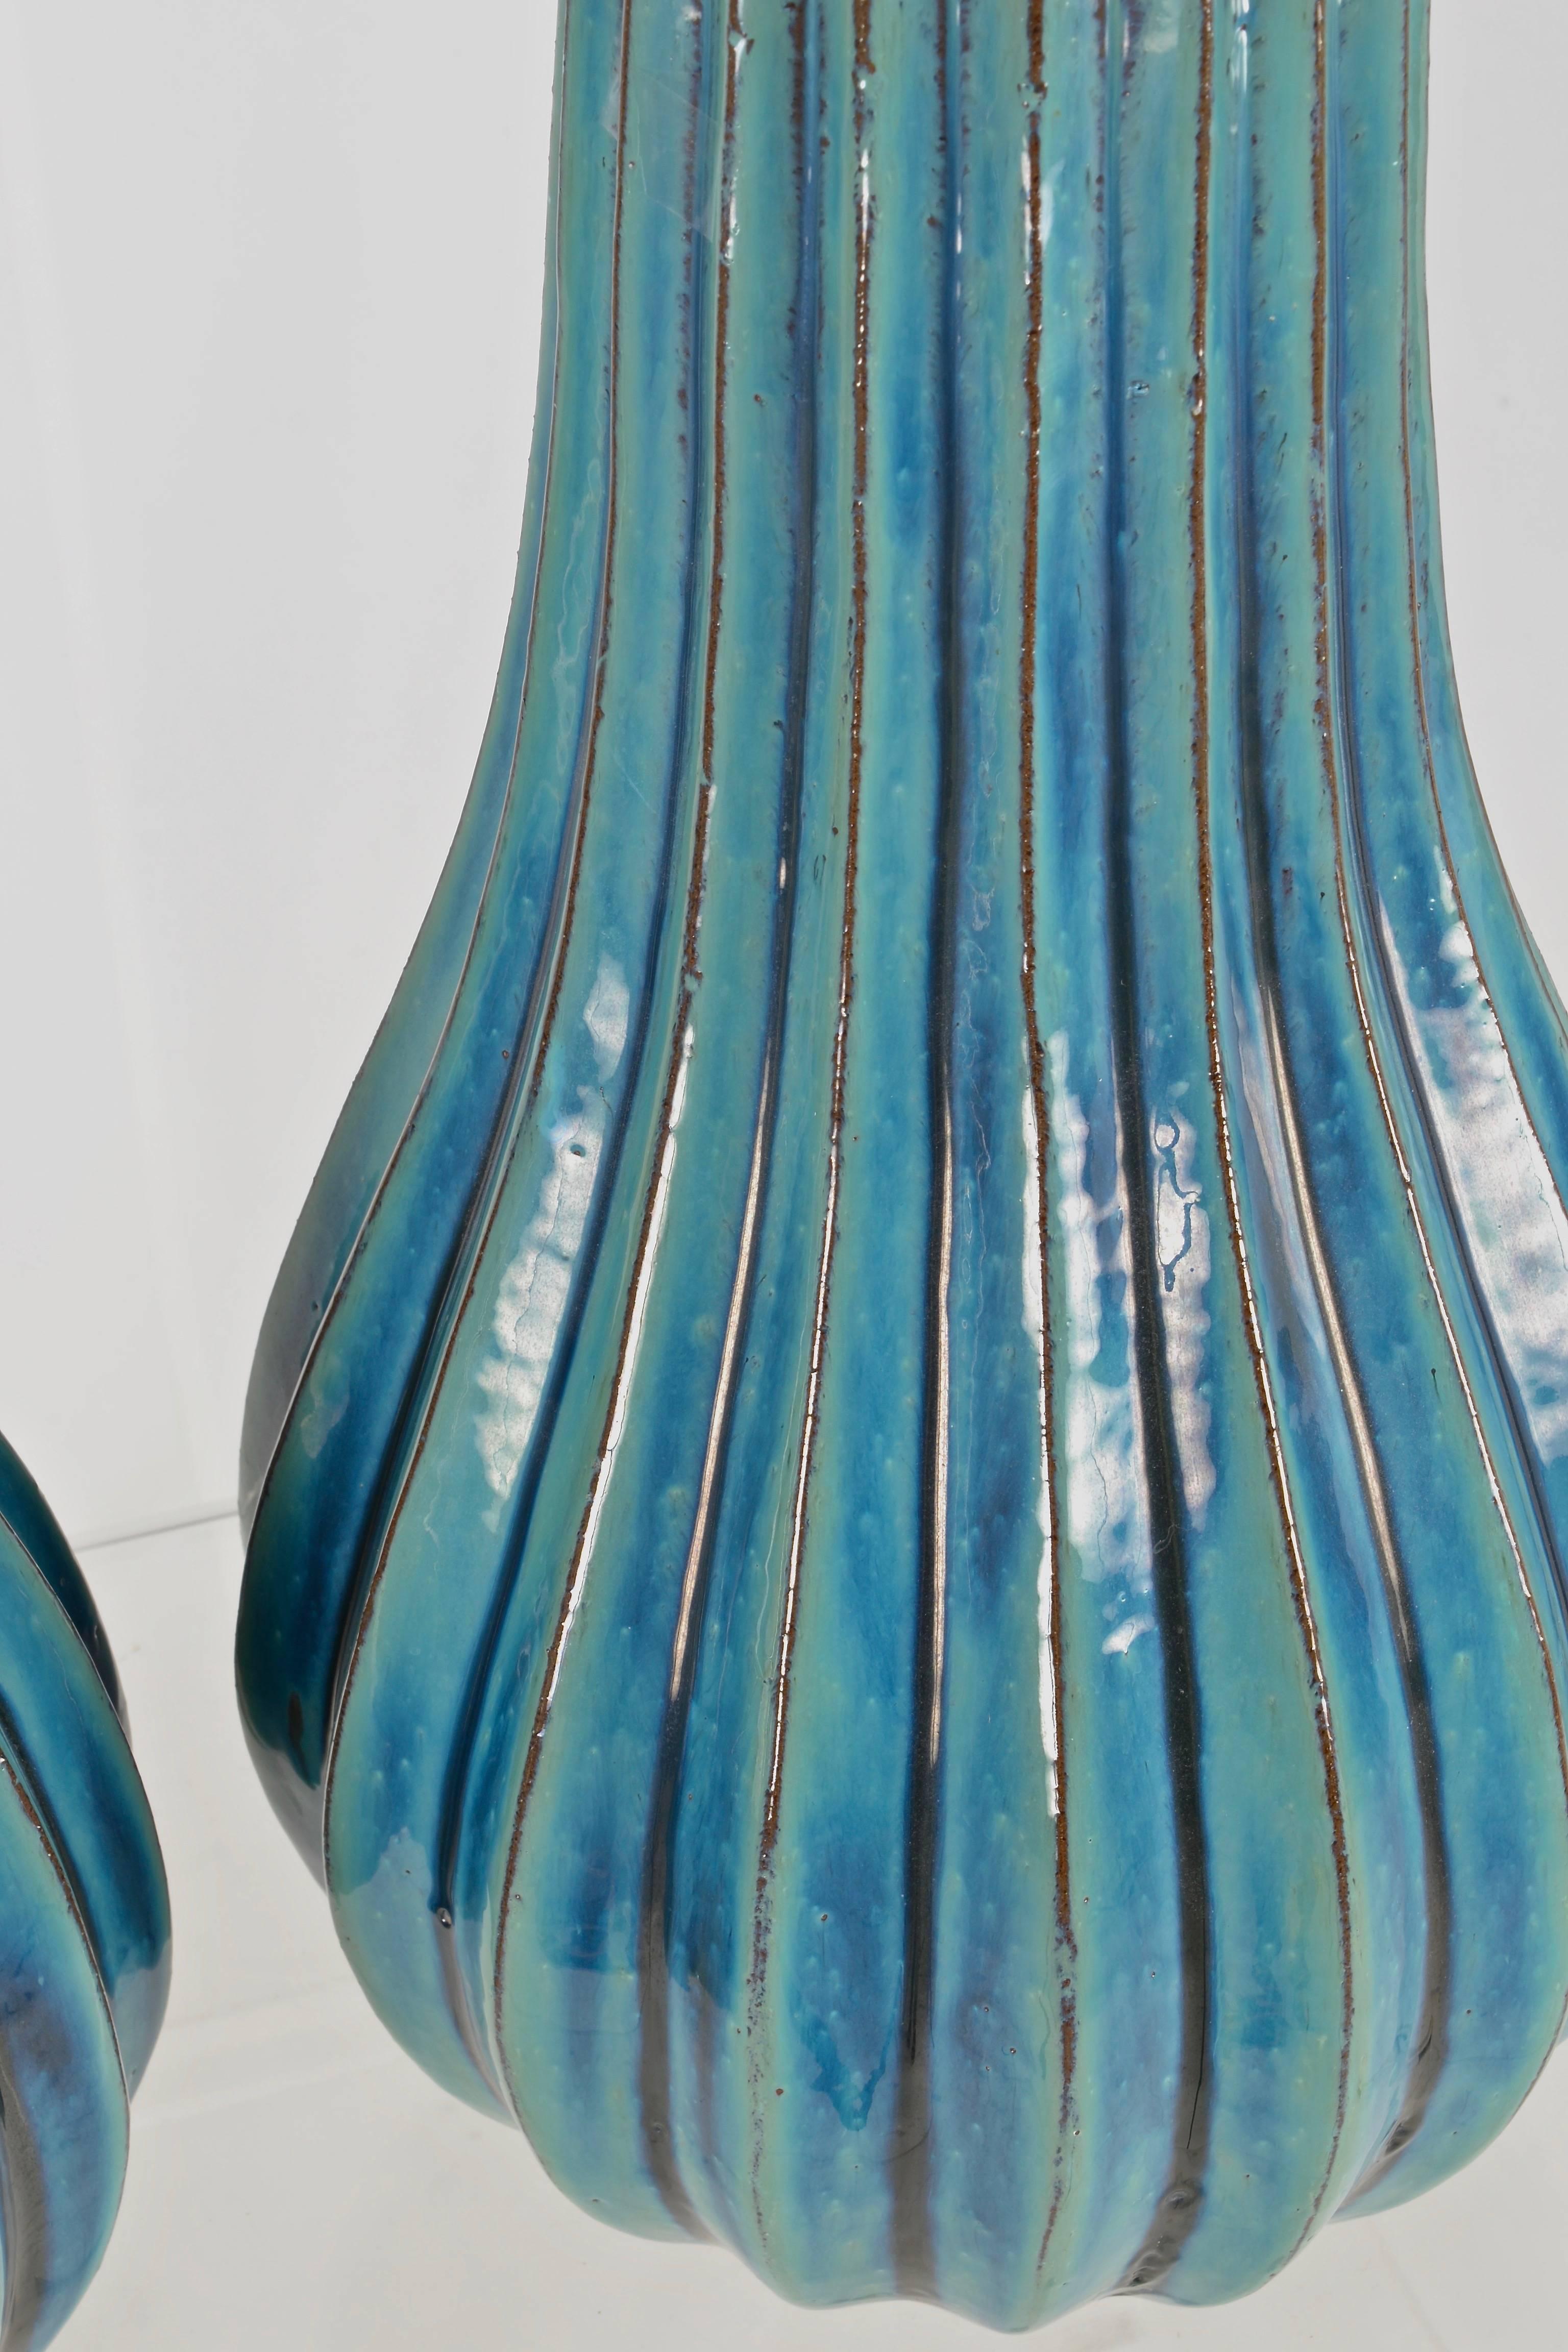 Late 20th Century Large Pair of Italian Glazed Terracotta Vases